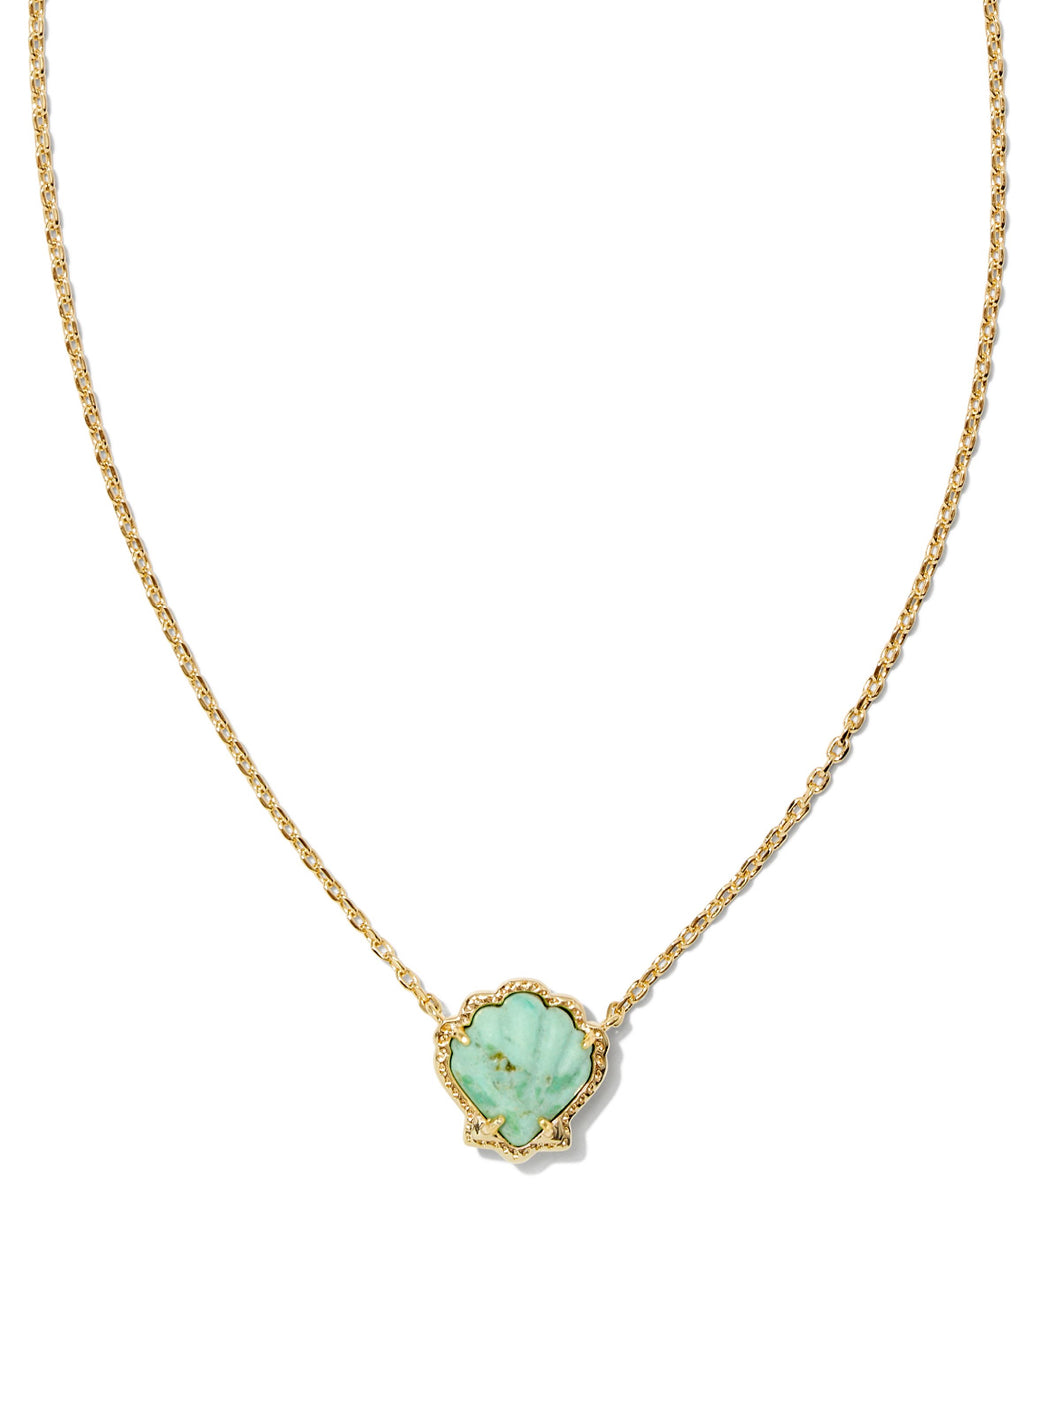 Kendra Scott: Brynne Shell Short Pendant Necklace in Gold Sea Green Chrysocolla